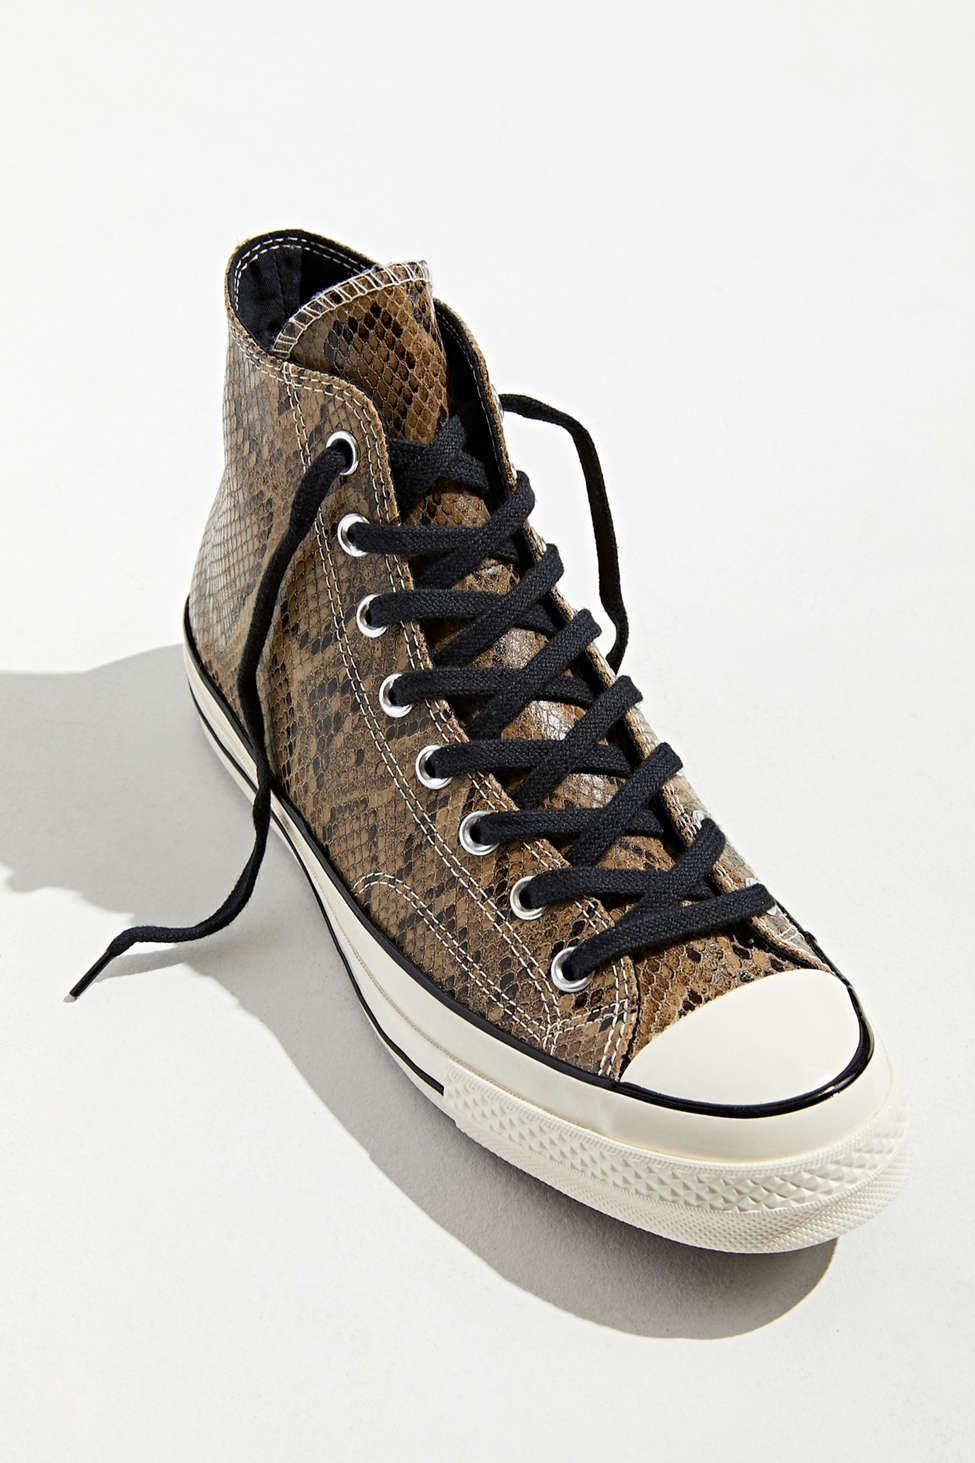 Converse Rubber Chuck 70 Snakeskin High-top Sneaker in Brown for Men - Lyst